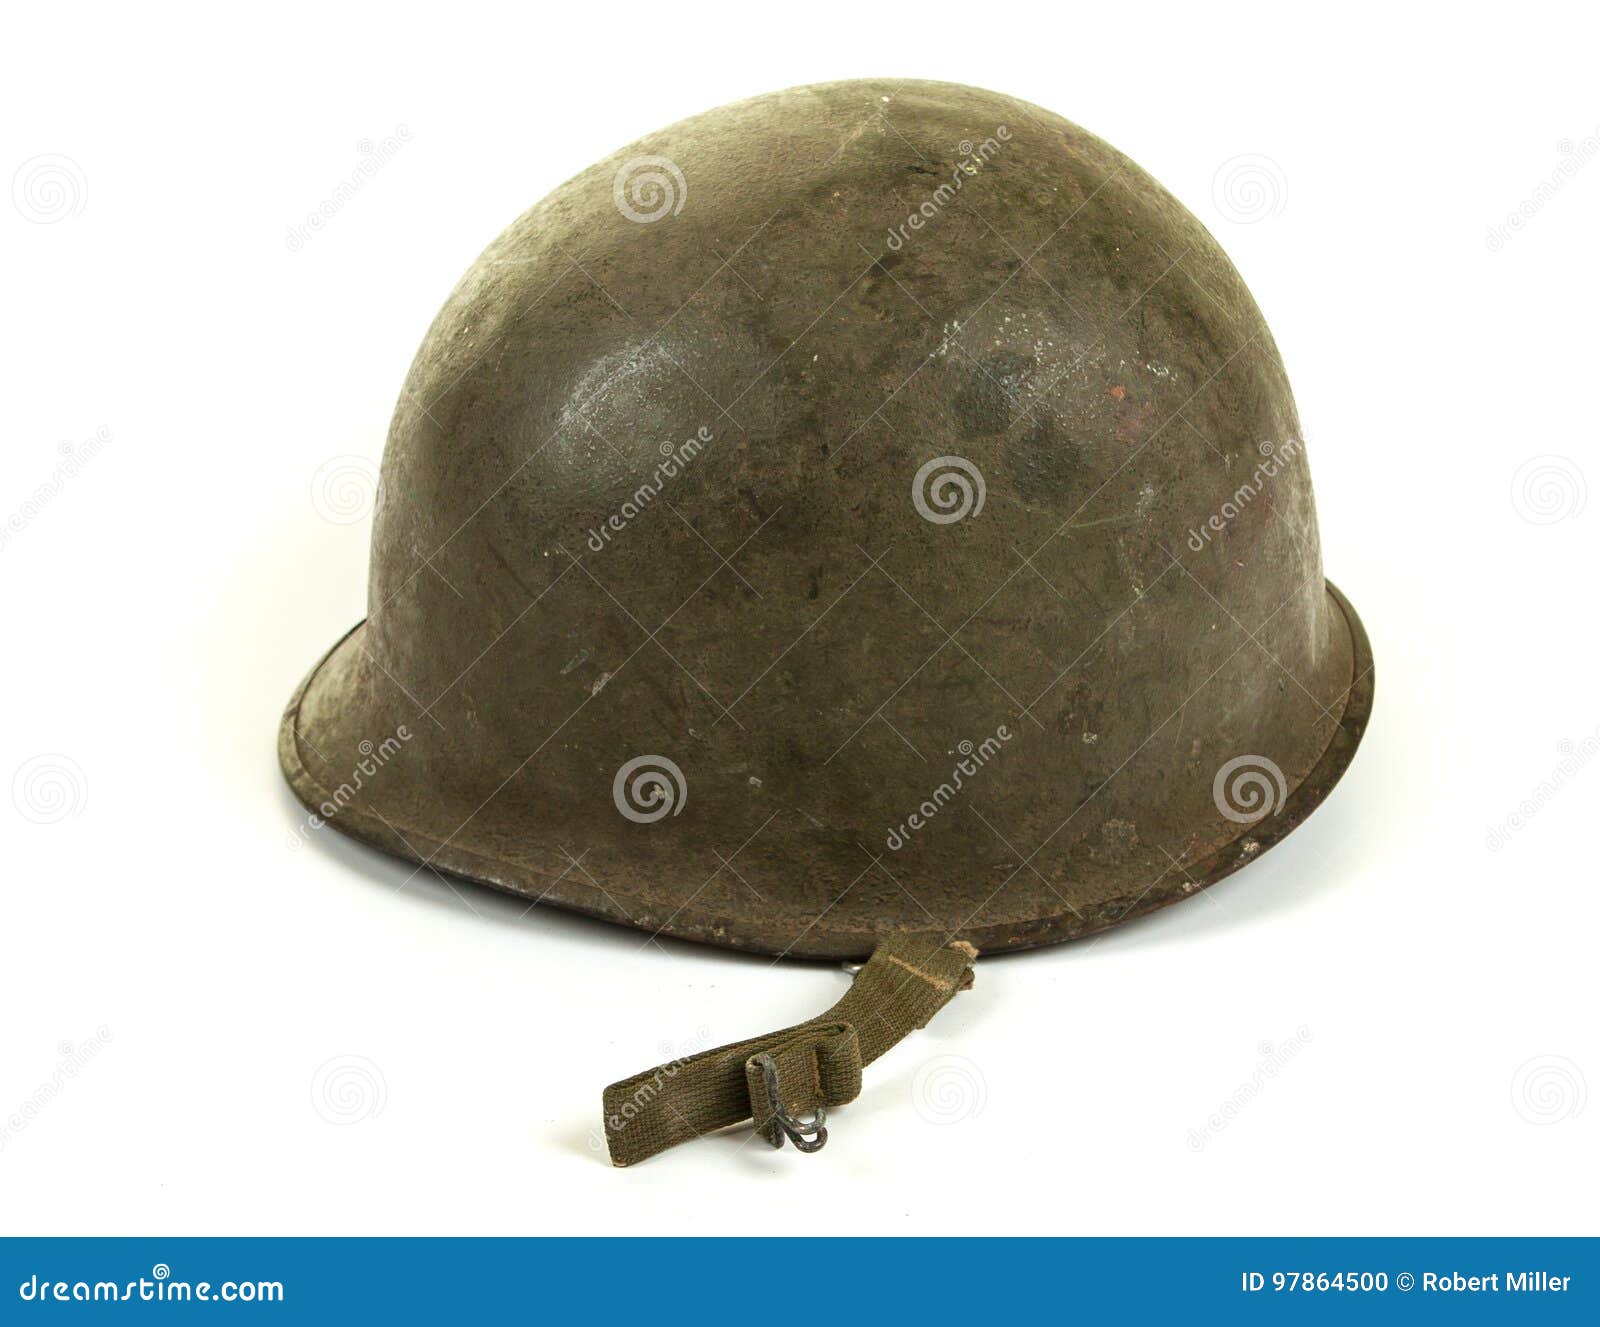 a u.s. ww2 army helmet